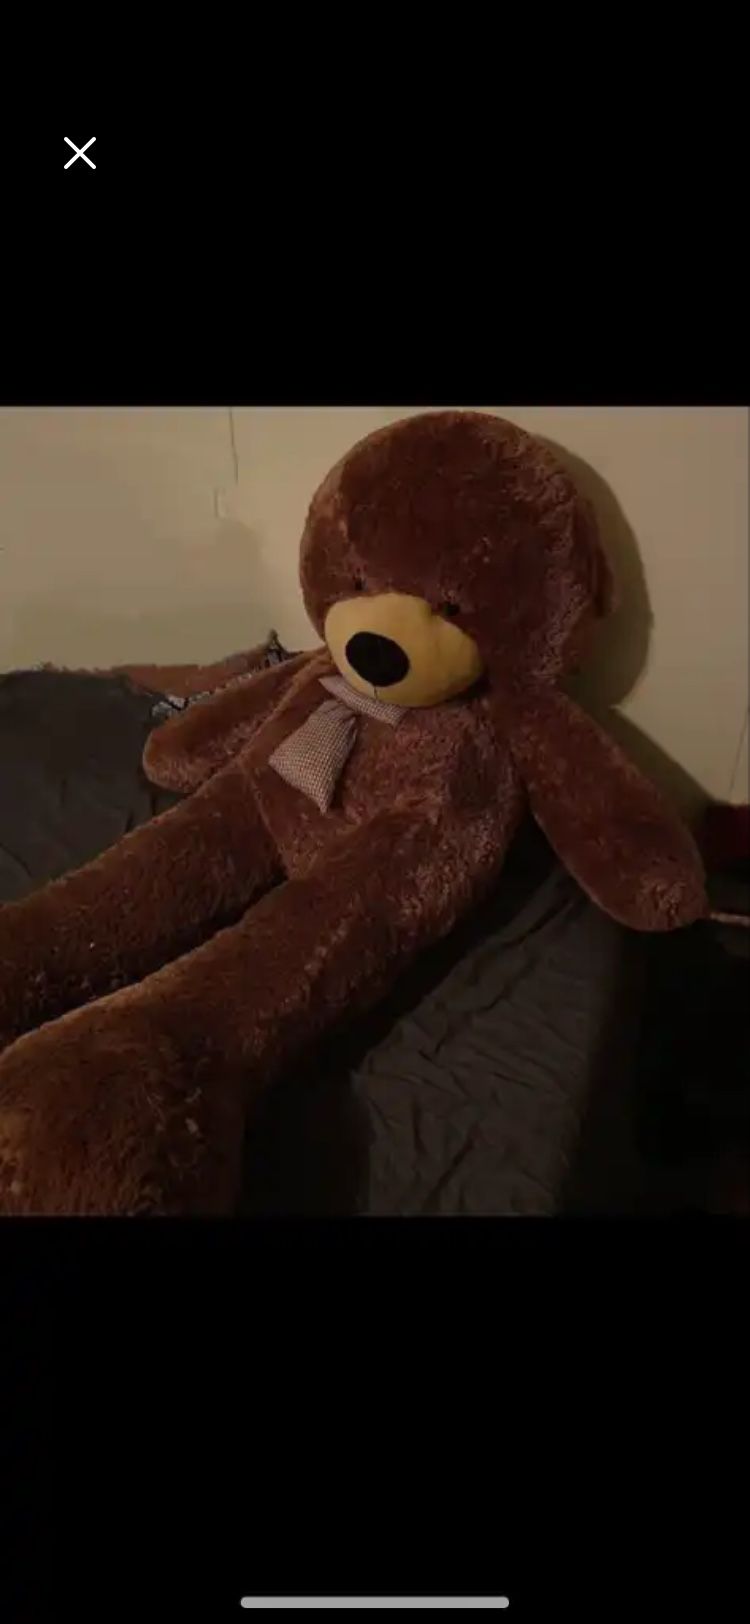 giant 6 Foot Tall brown teddy bear Authentic Giant Teddy Tm 